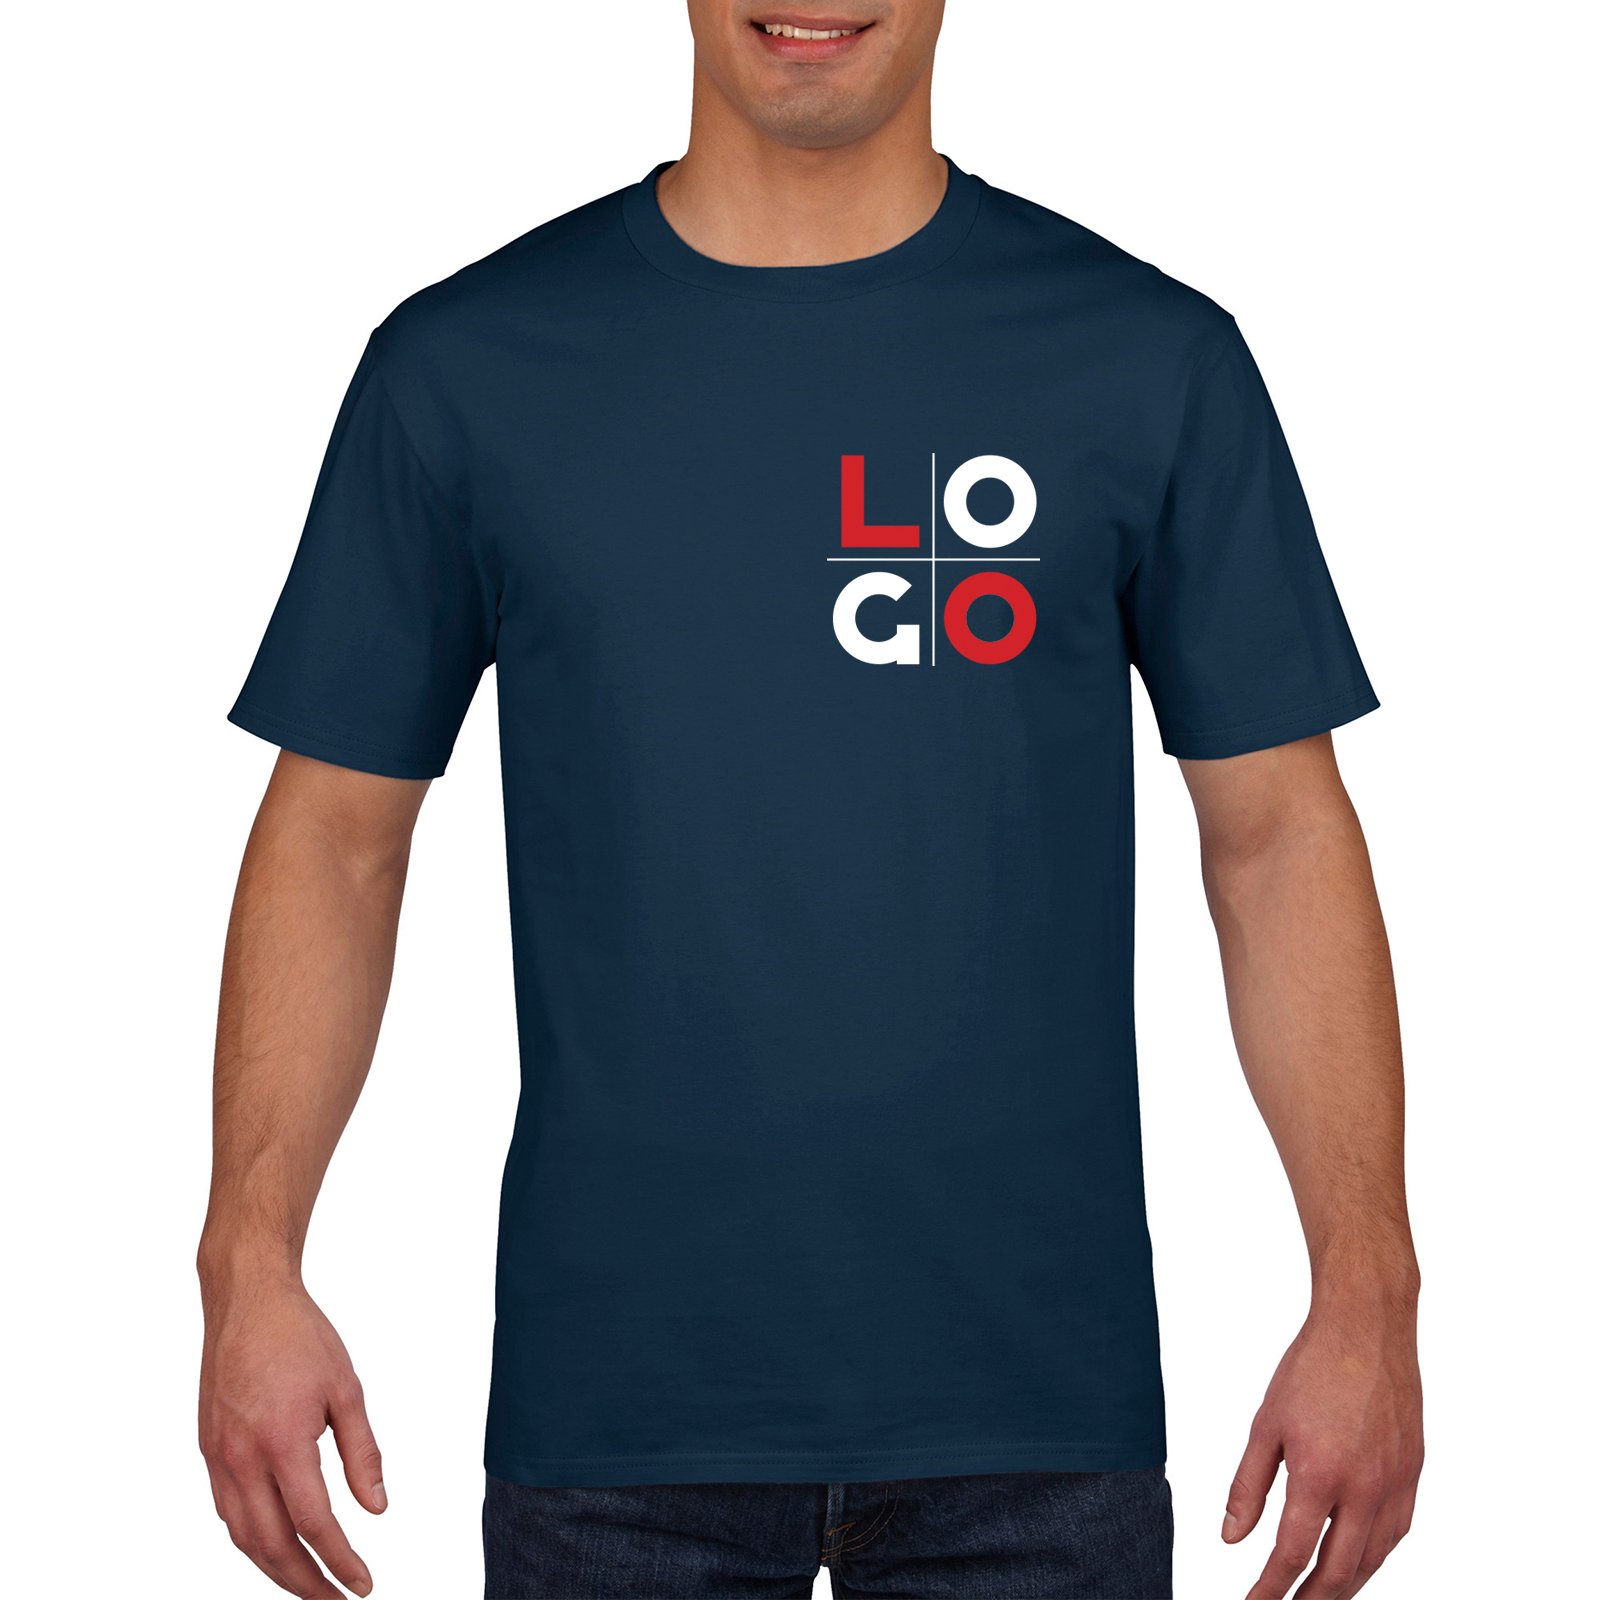 Premium Cotton 185 T-shirt with your LOGO